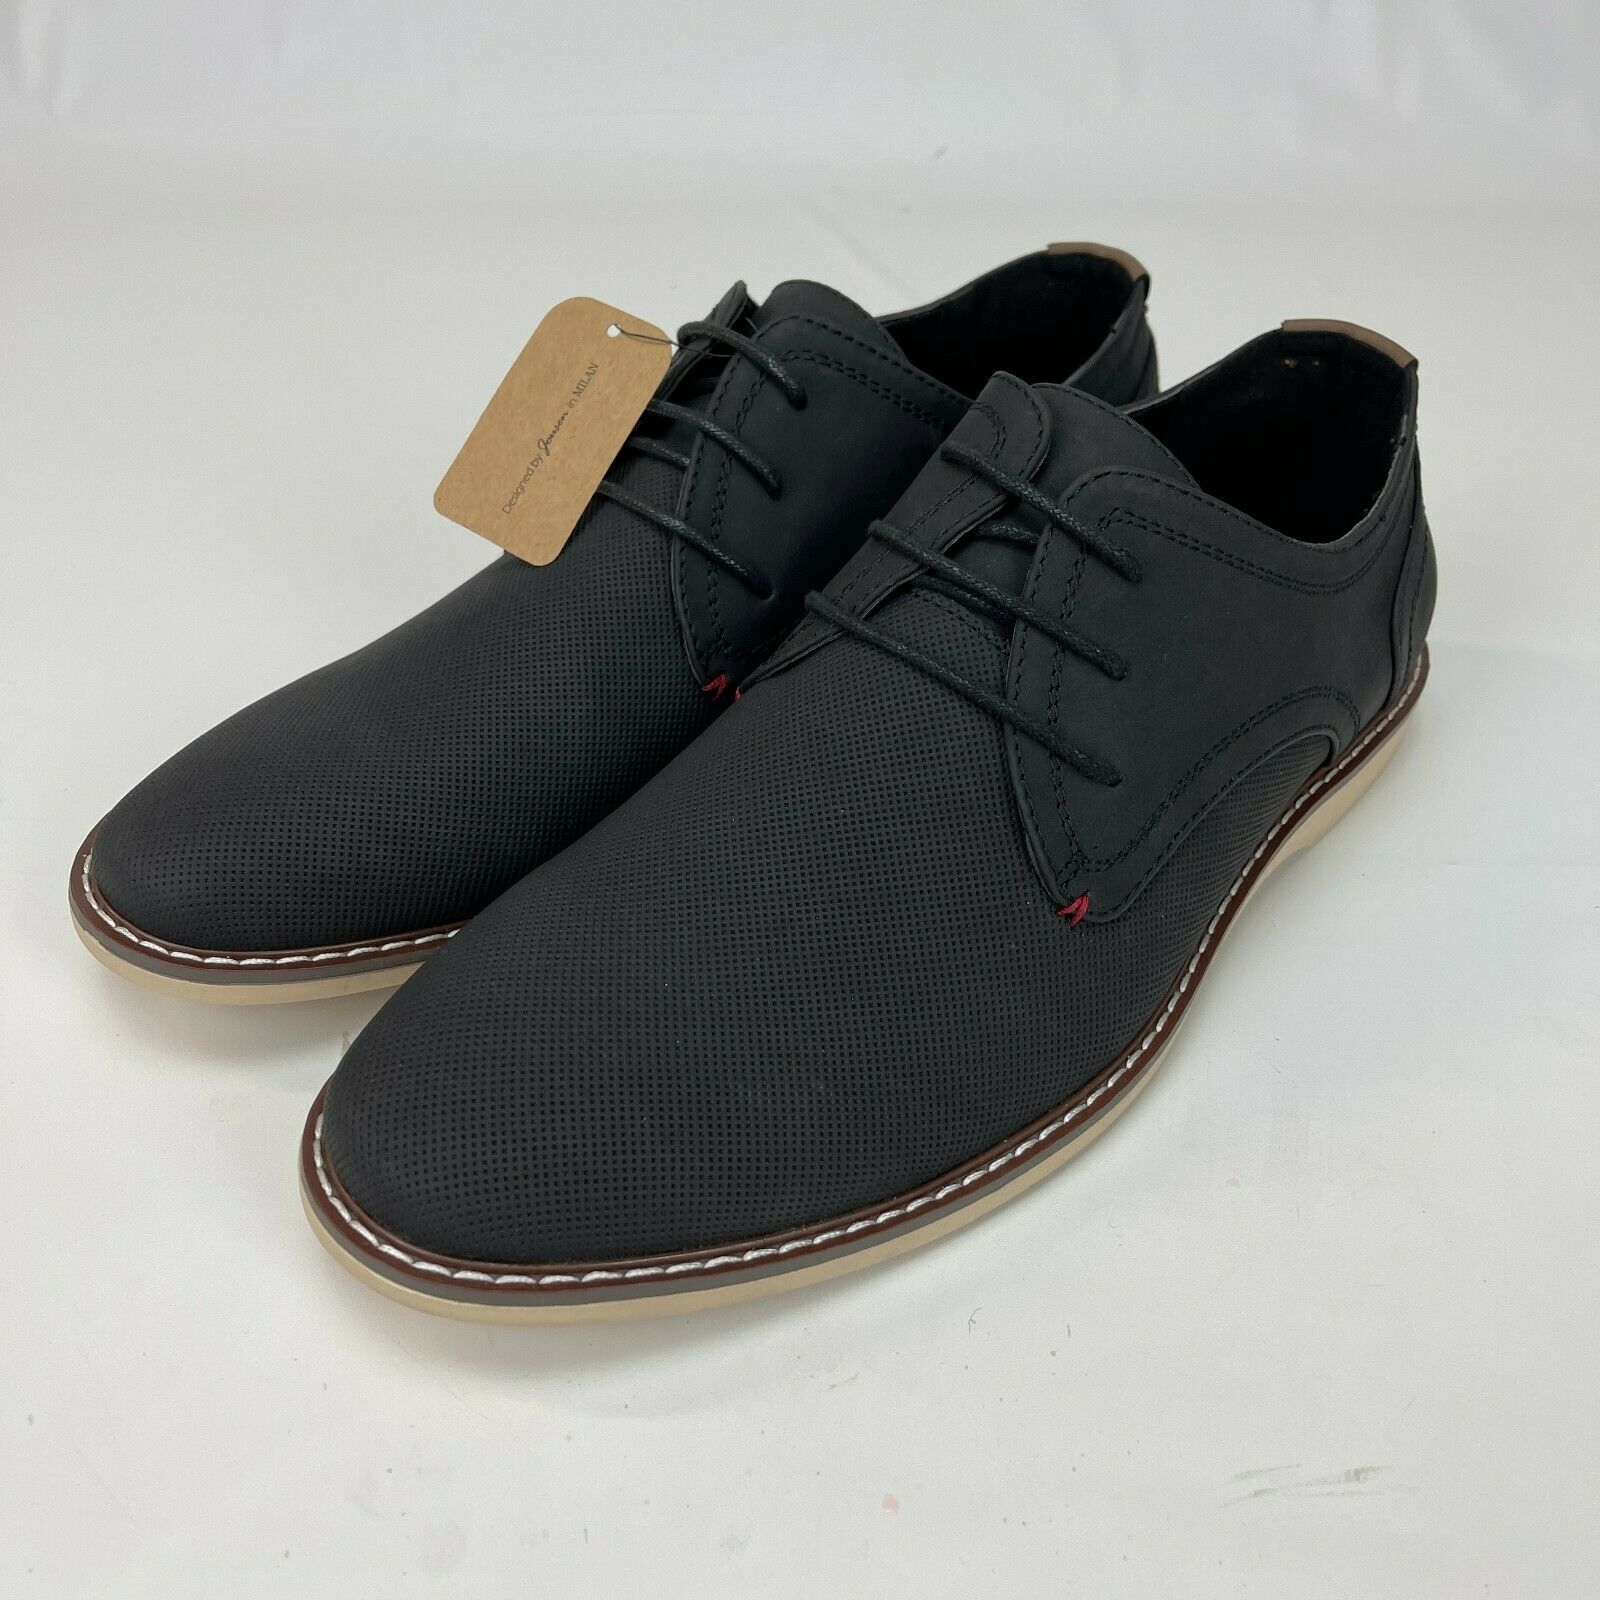 Jousen Mens Black Suede Oxford Business Casual Dress Classic Derby Shoes Size 11